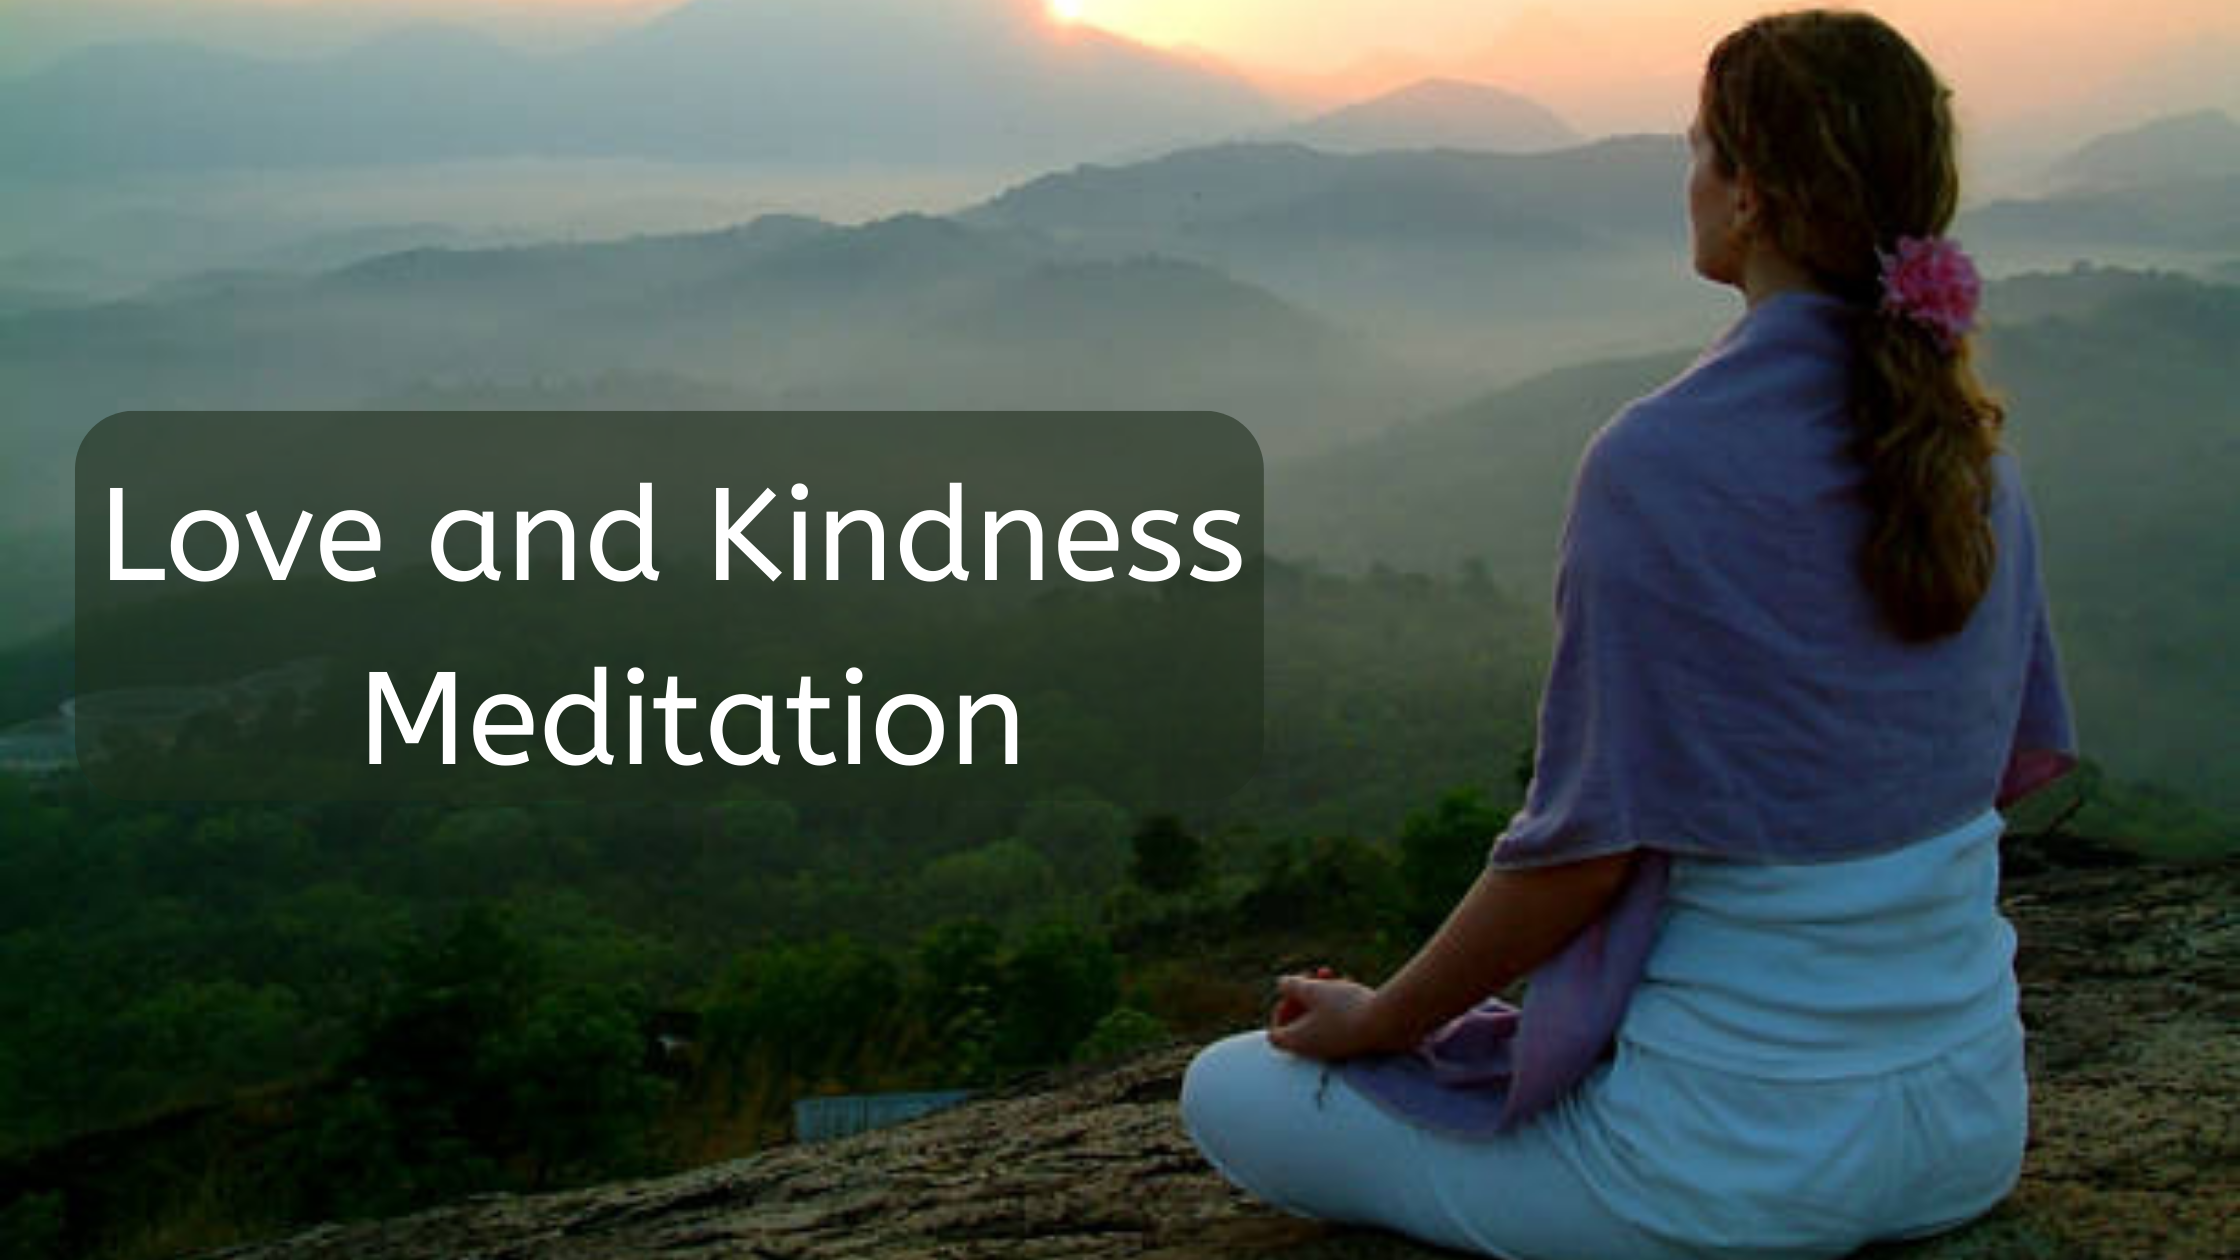 WHAT IS MEDITATION ON LOVING-KINDNESS?